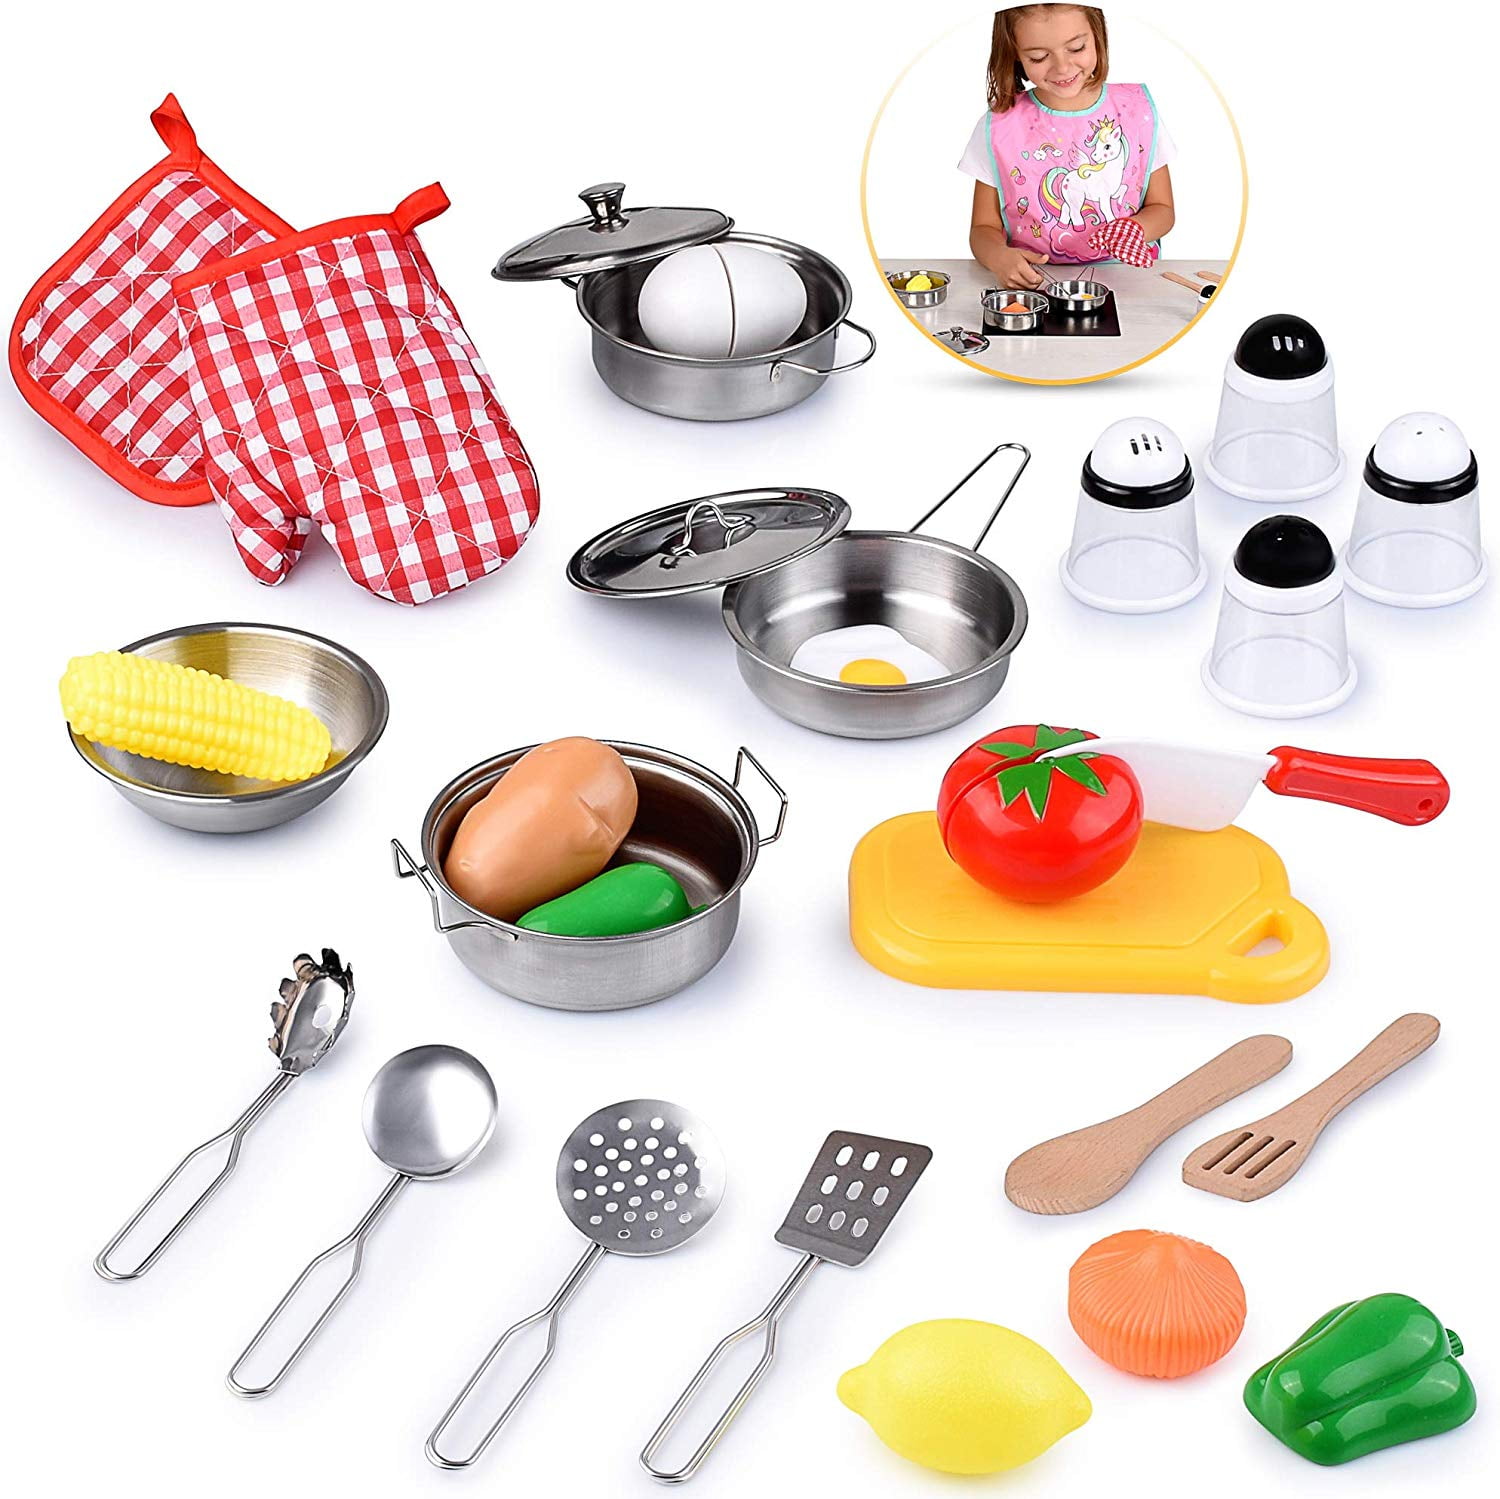 Children Kids Kitchen Utensils Pots Pans Play Toys Dishes Food Cook Cookin F5V8 